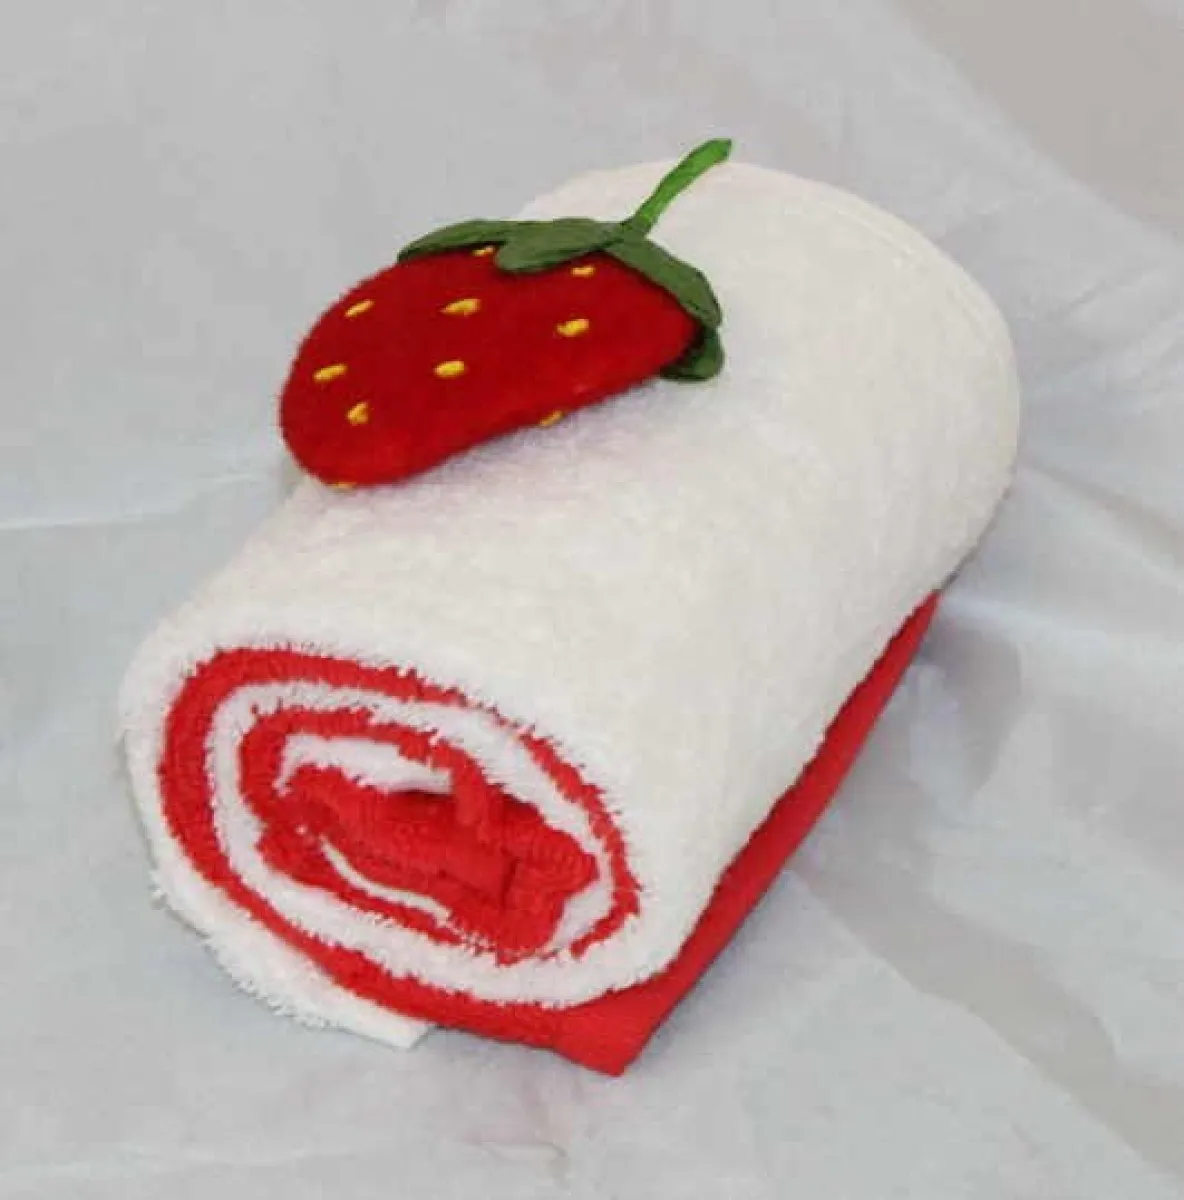 Handdoekcake Handdoekrol aardbei rood/wit